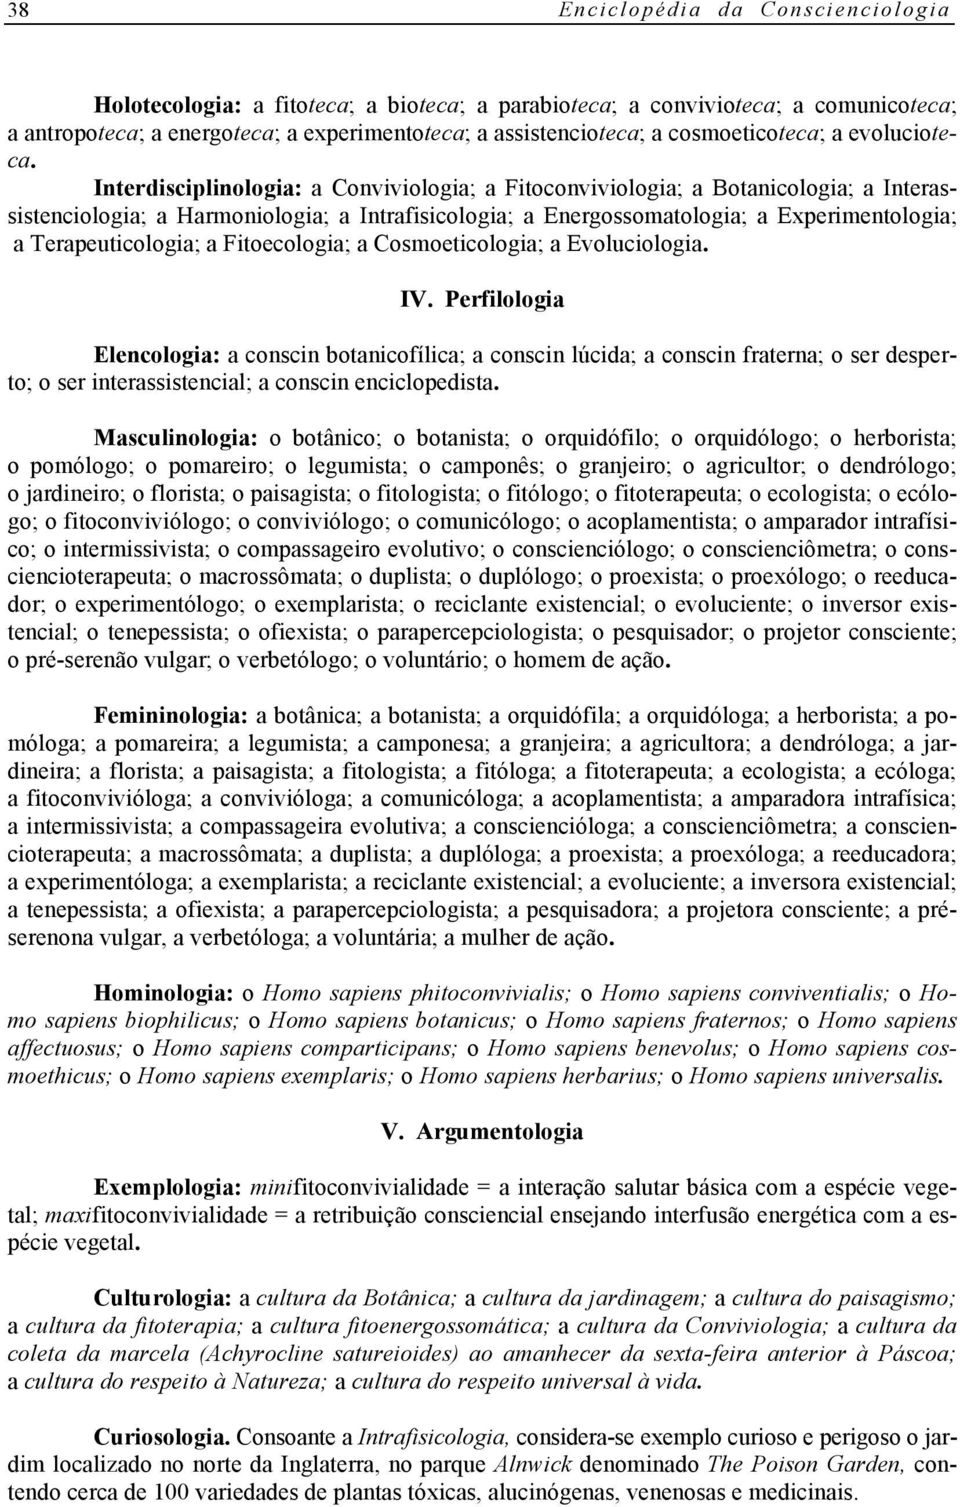 Interdisciplinologia: a Conviviologia; a Fitoconviviologia; a Botanicologia; a Interassistenciologia; a Harmoniologia; a Intrafisicologia; a Energossomatologia; a Experimentologia; a